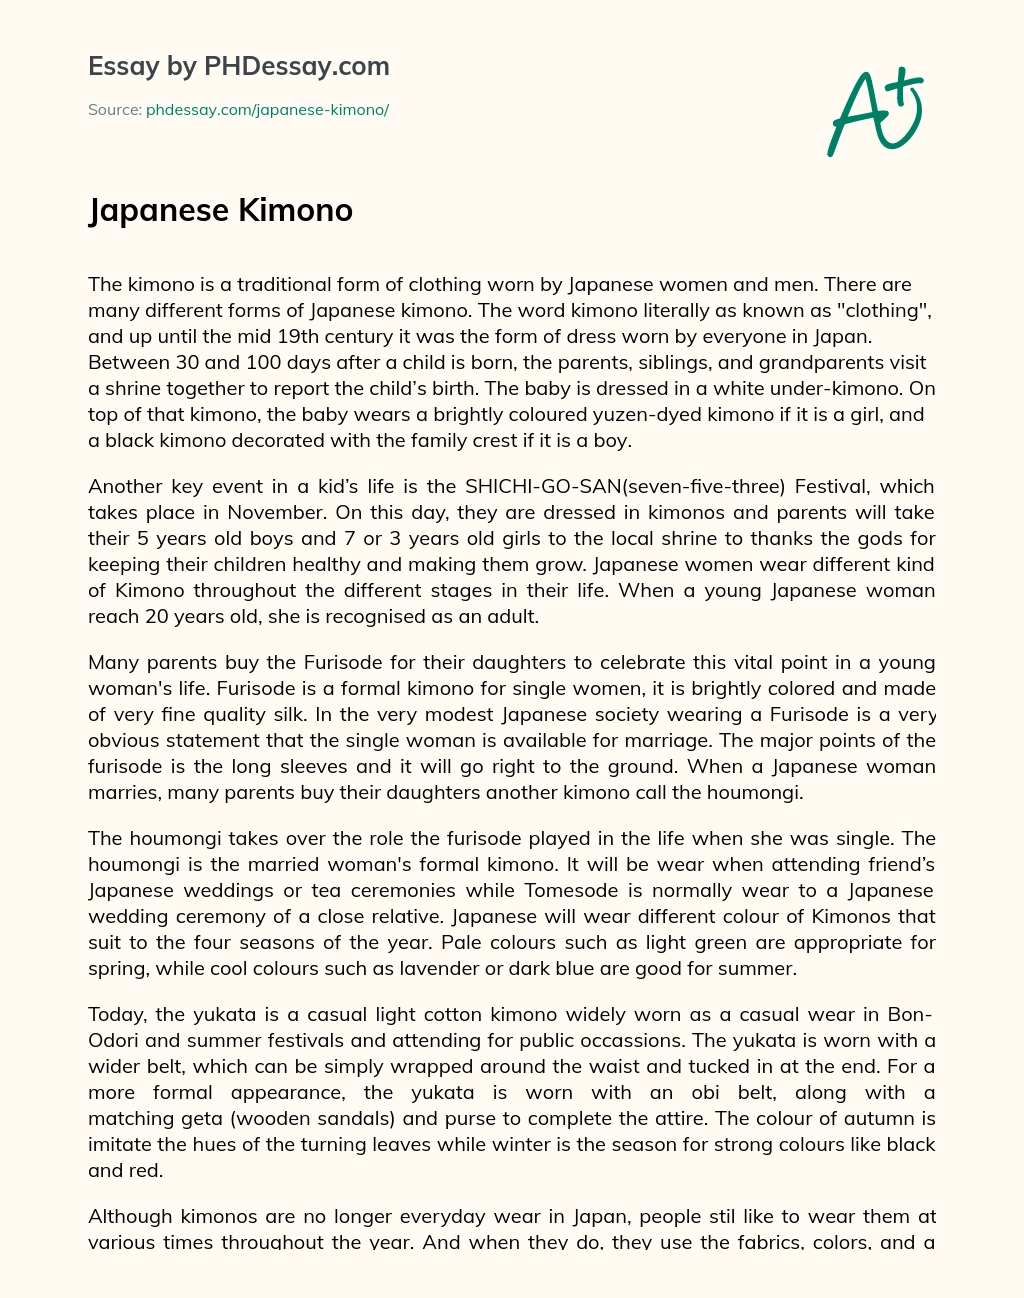 Japanese Kimono essay